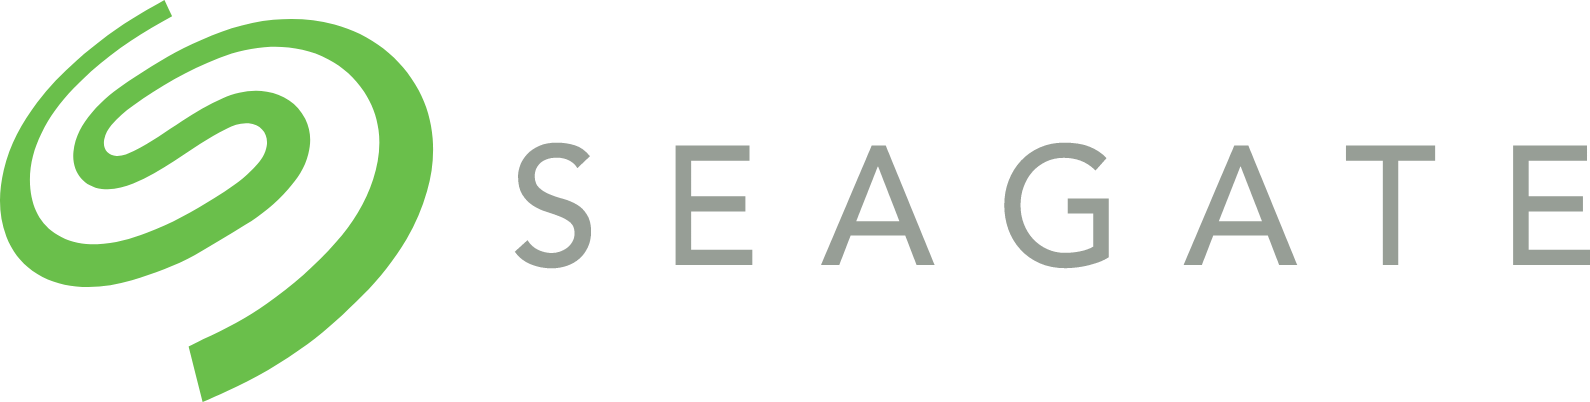 Seagate Technology logo large (transparent PNG)